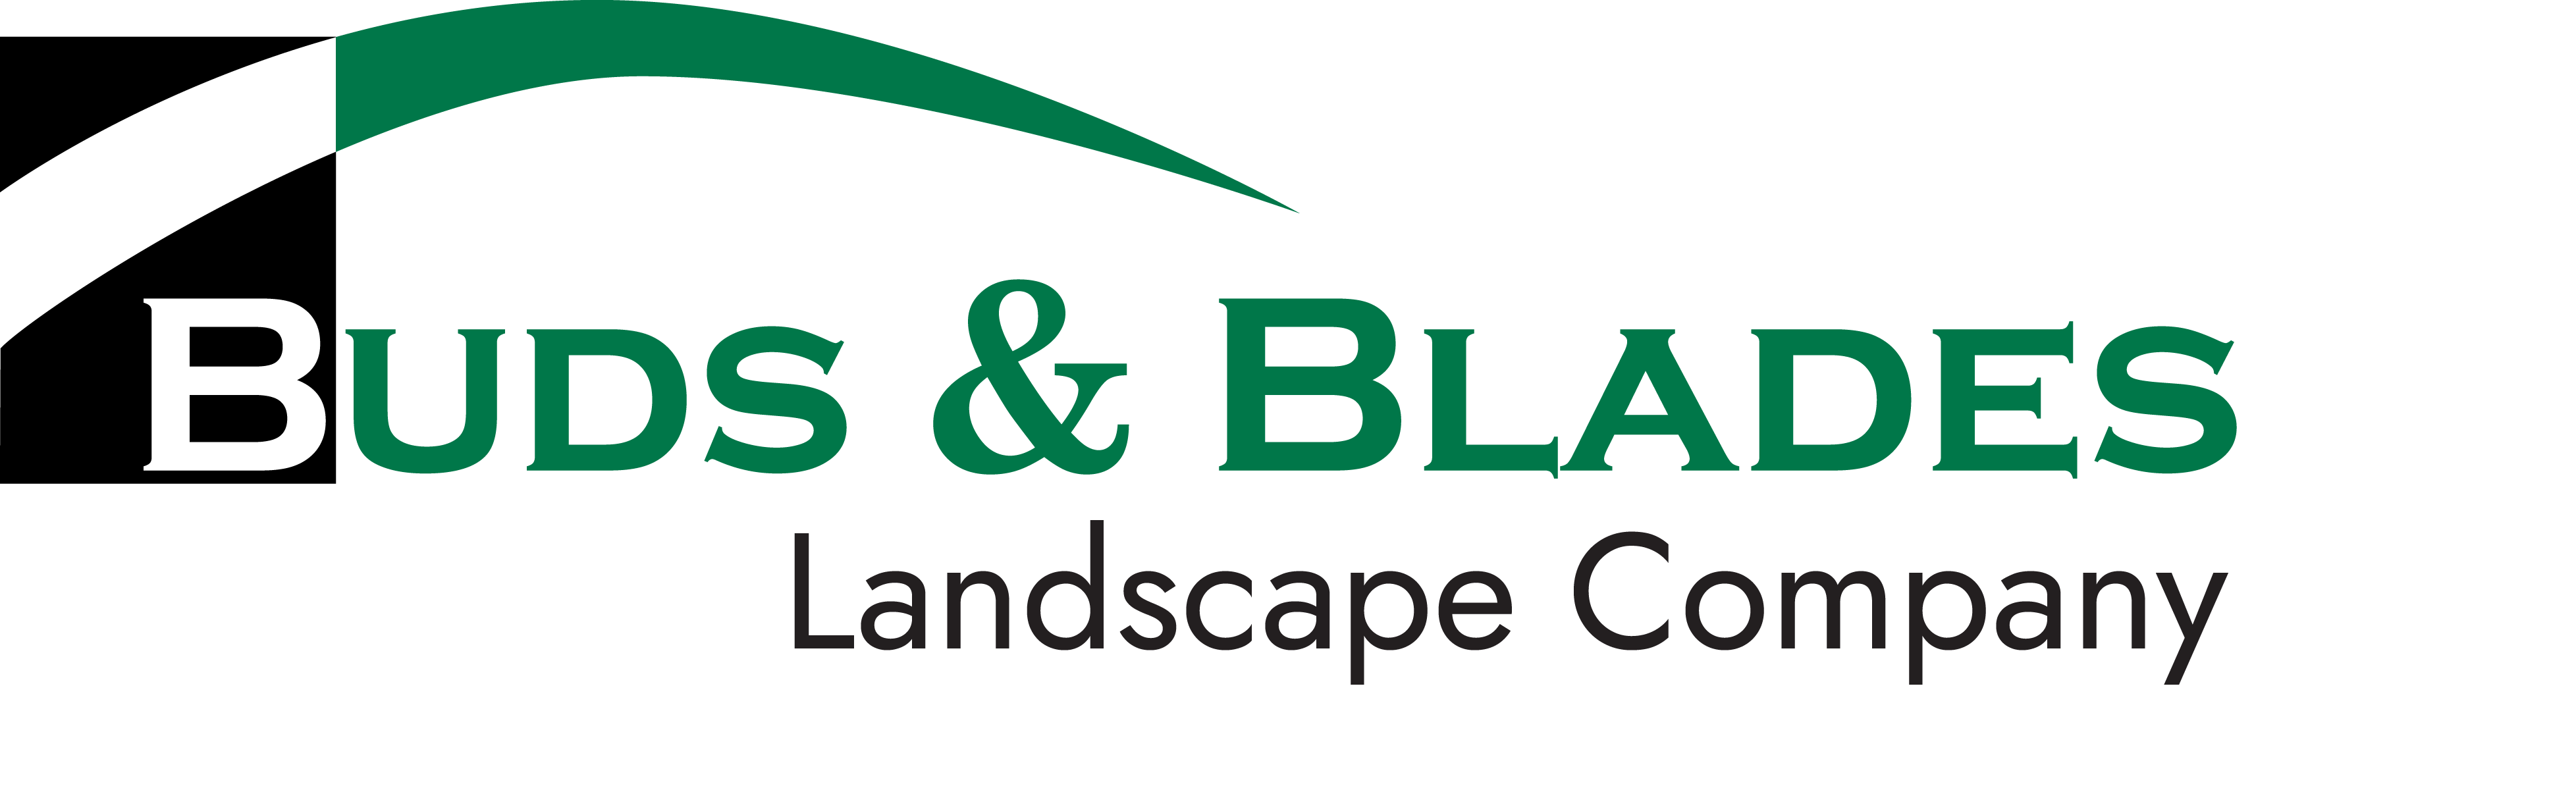 Buds and Blades Landscape Company logo